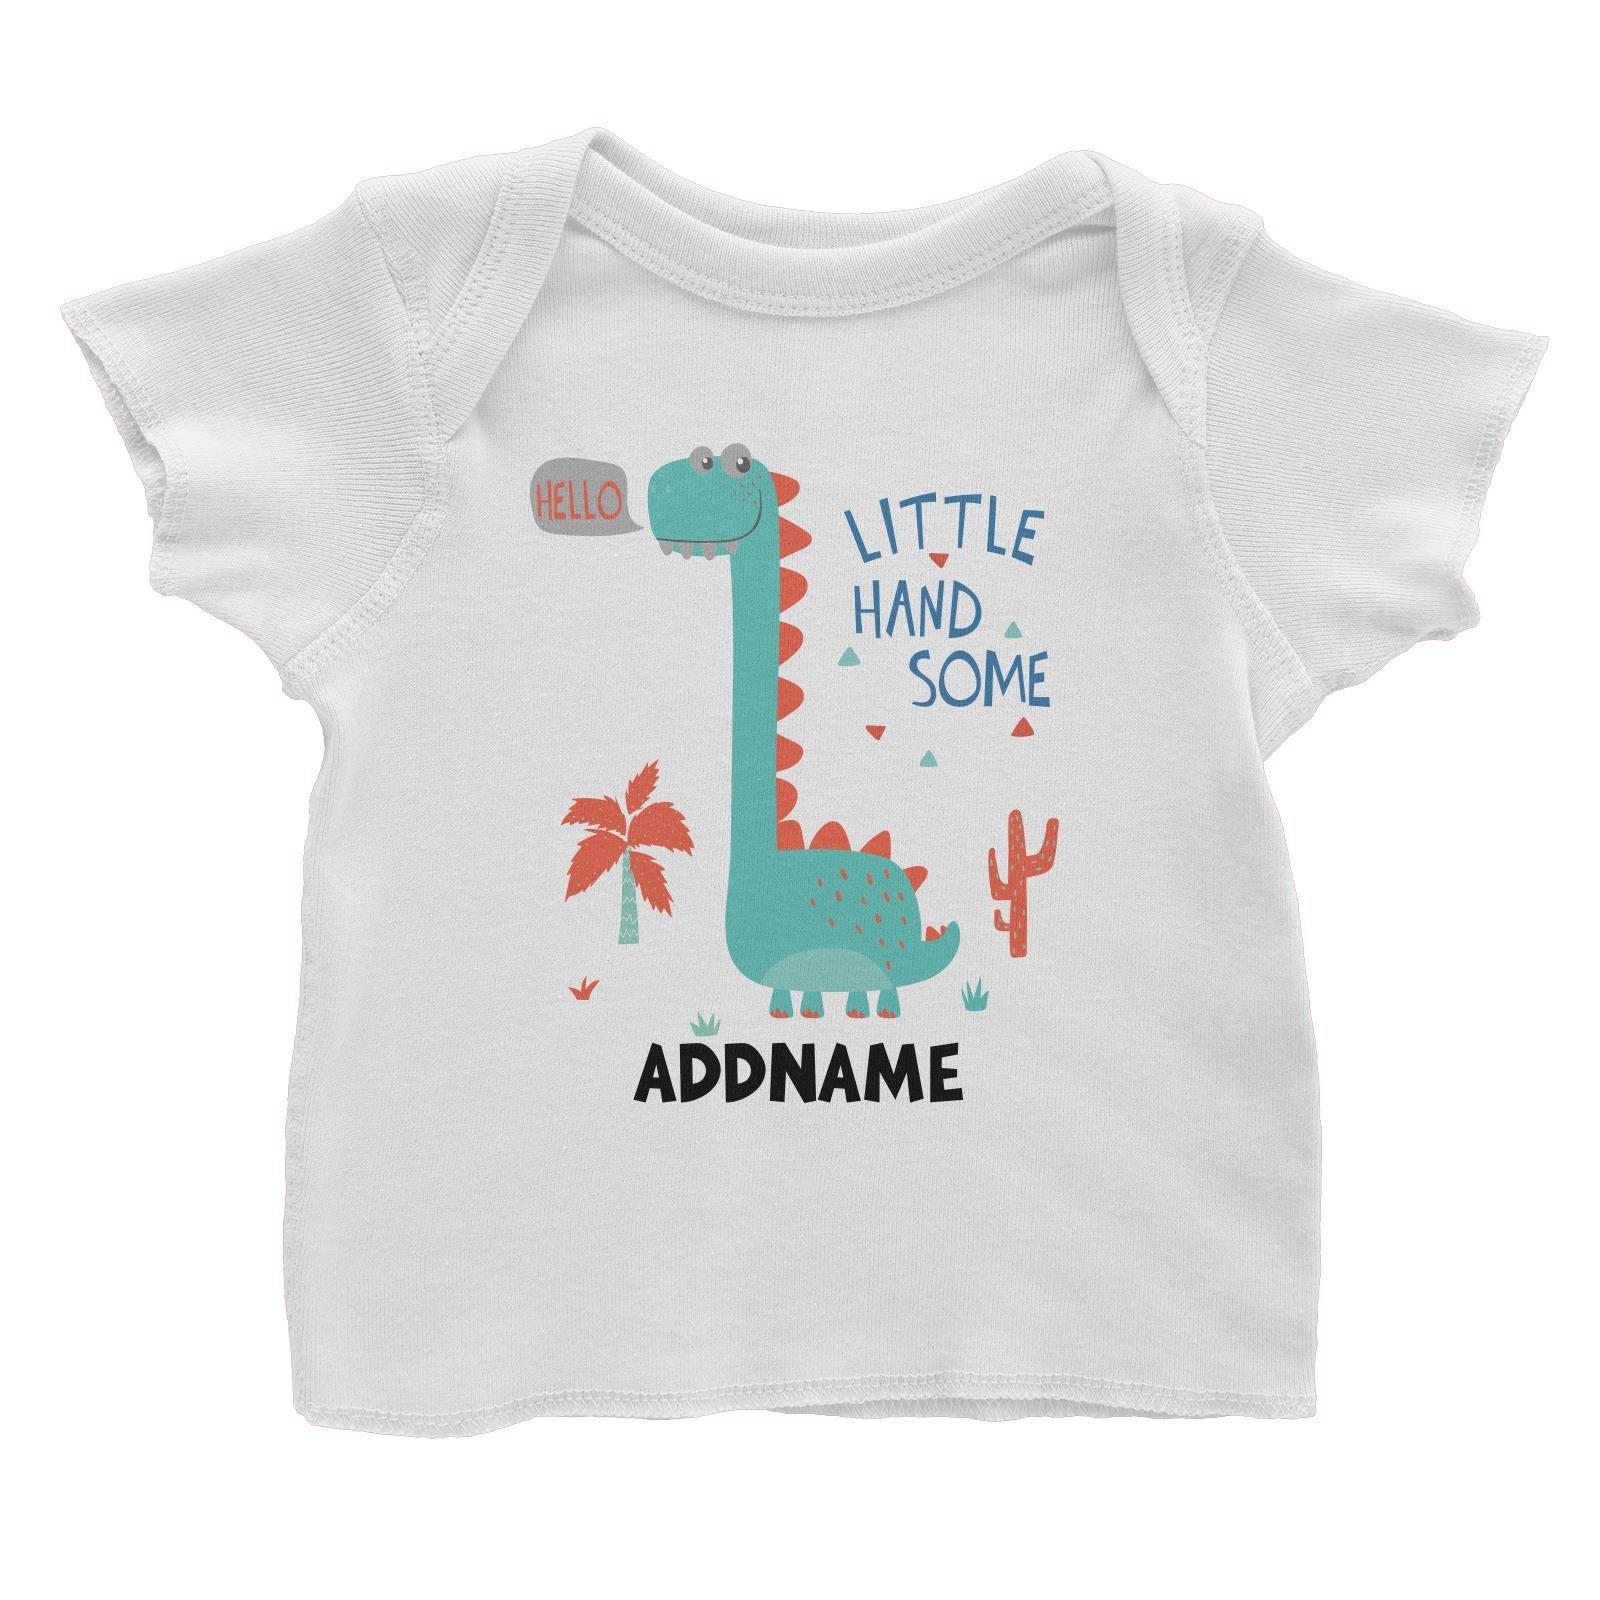 Hello Little Handsome Dinosaur Addname White Baby T-Shirt